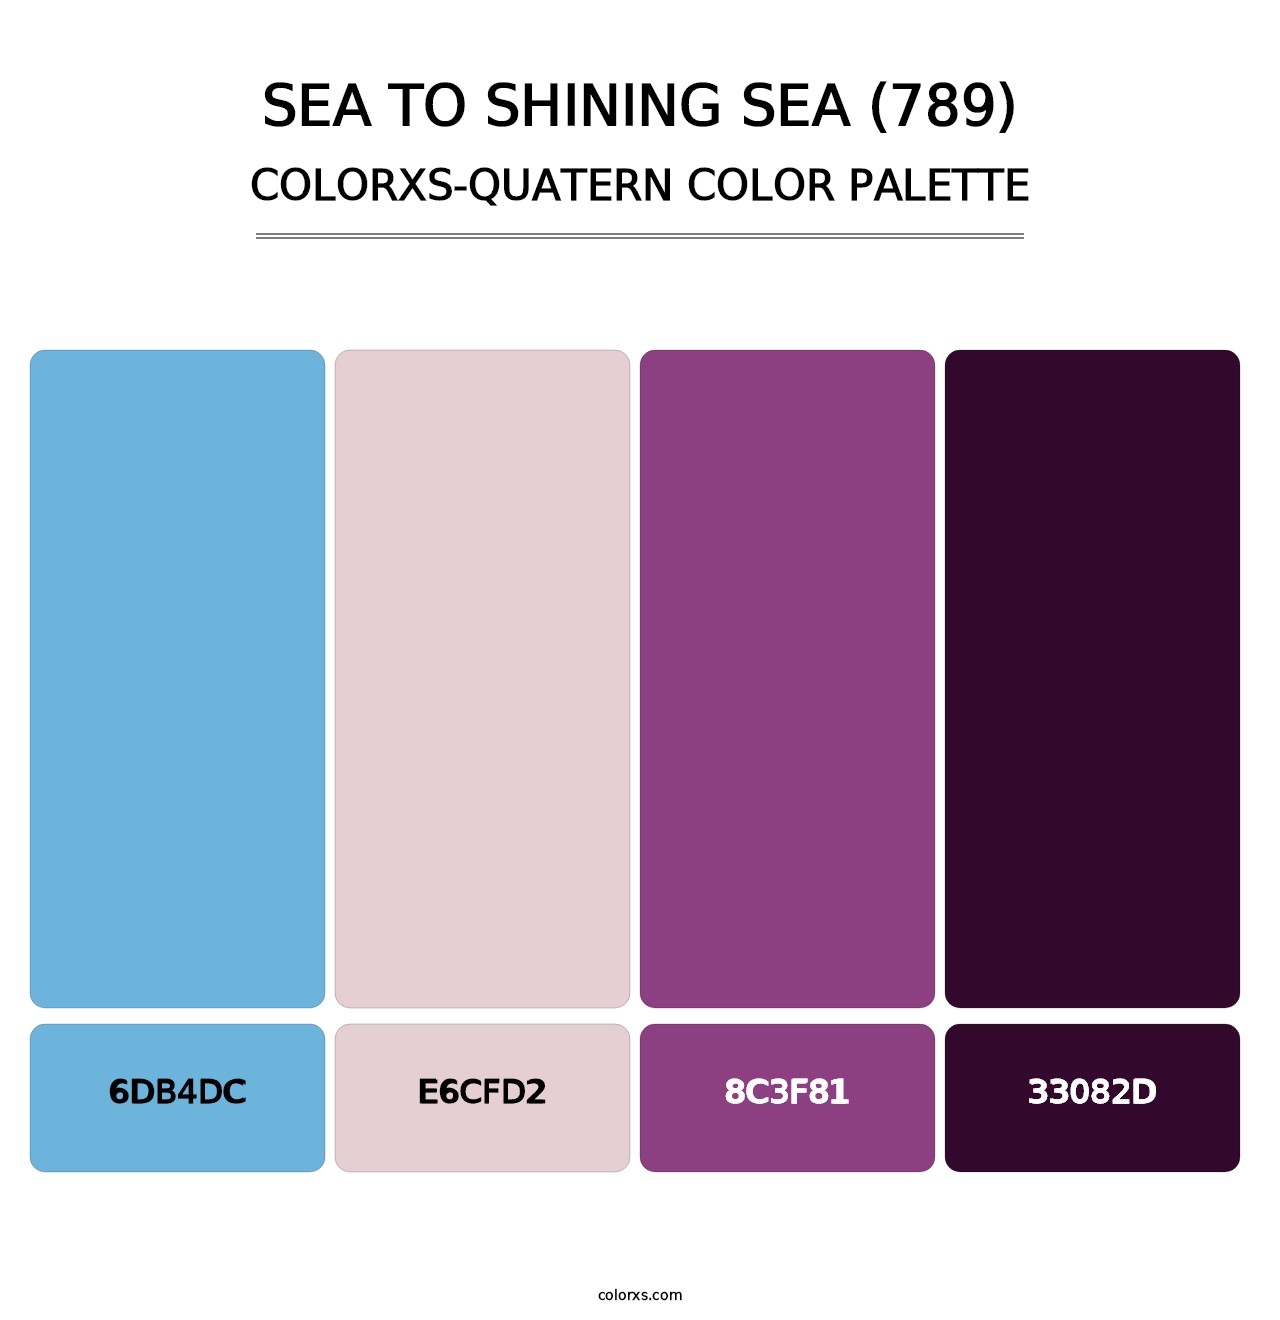 Sea to Shining Sea (789) - Colorxs Quatern Palette